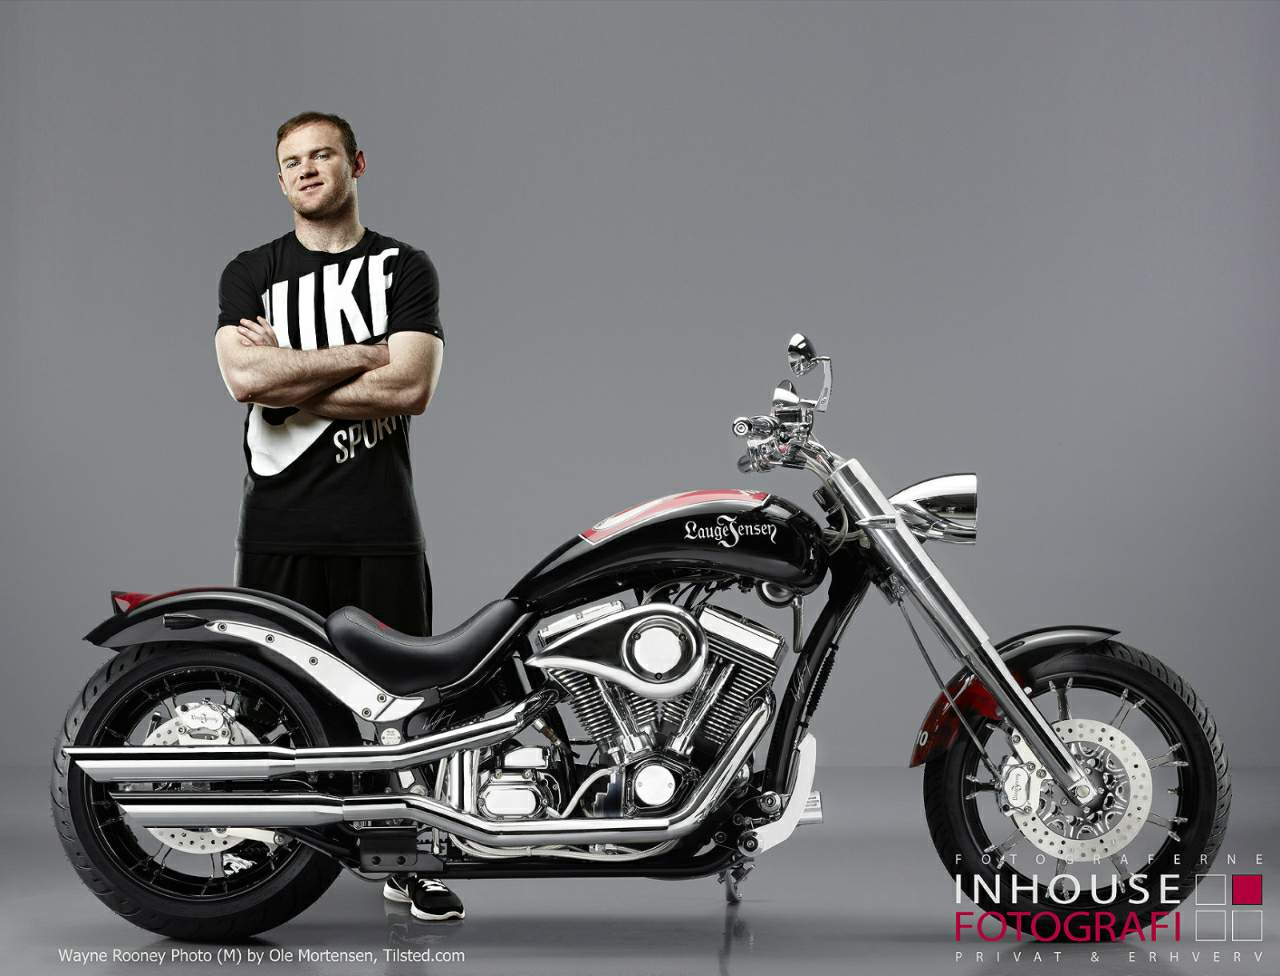 , Wayne Rooney diseñó una bicicleta Lauge Jensen personalizada